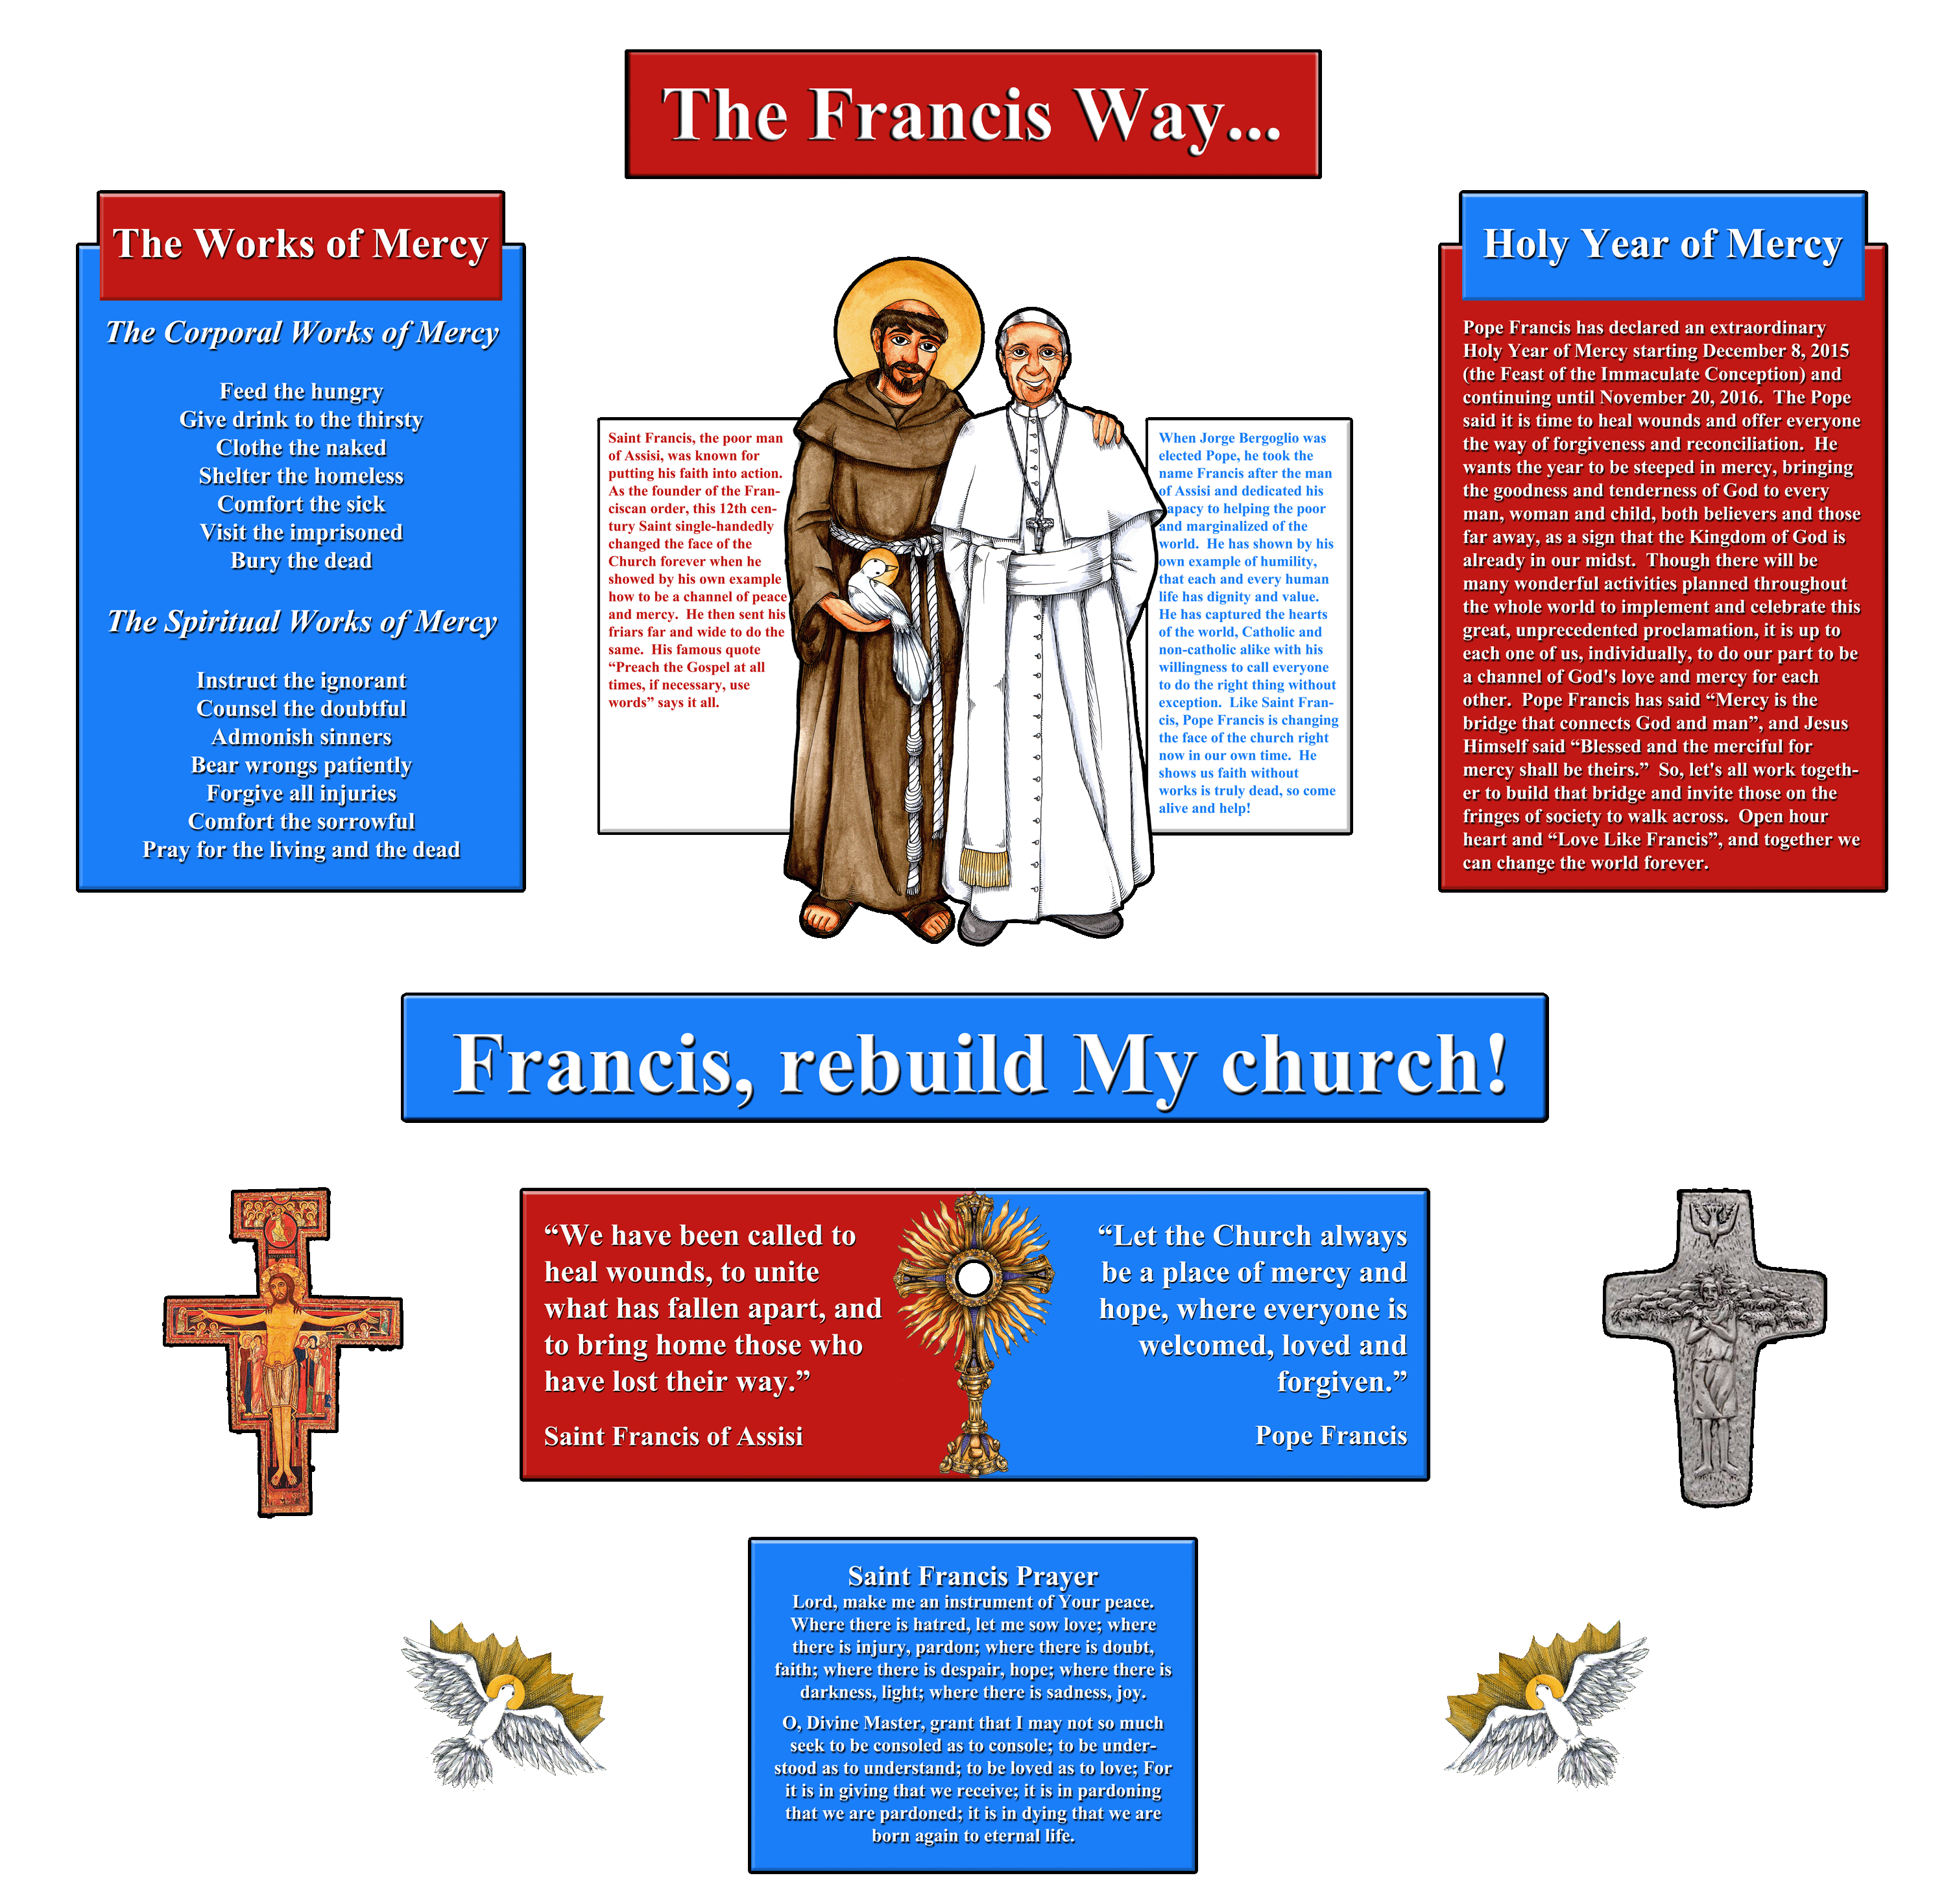 The Francis Way